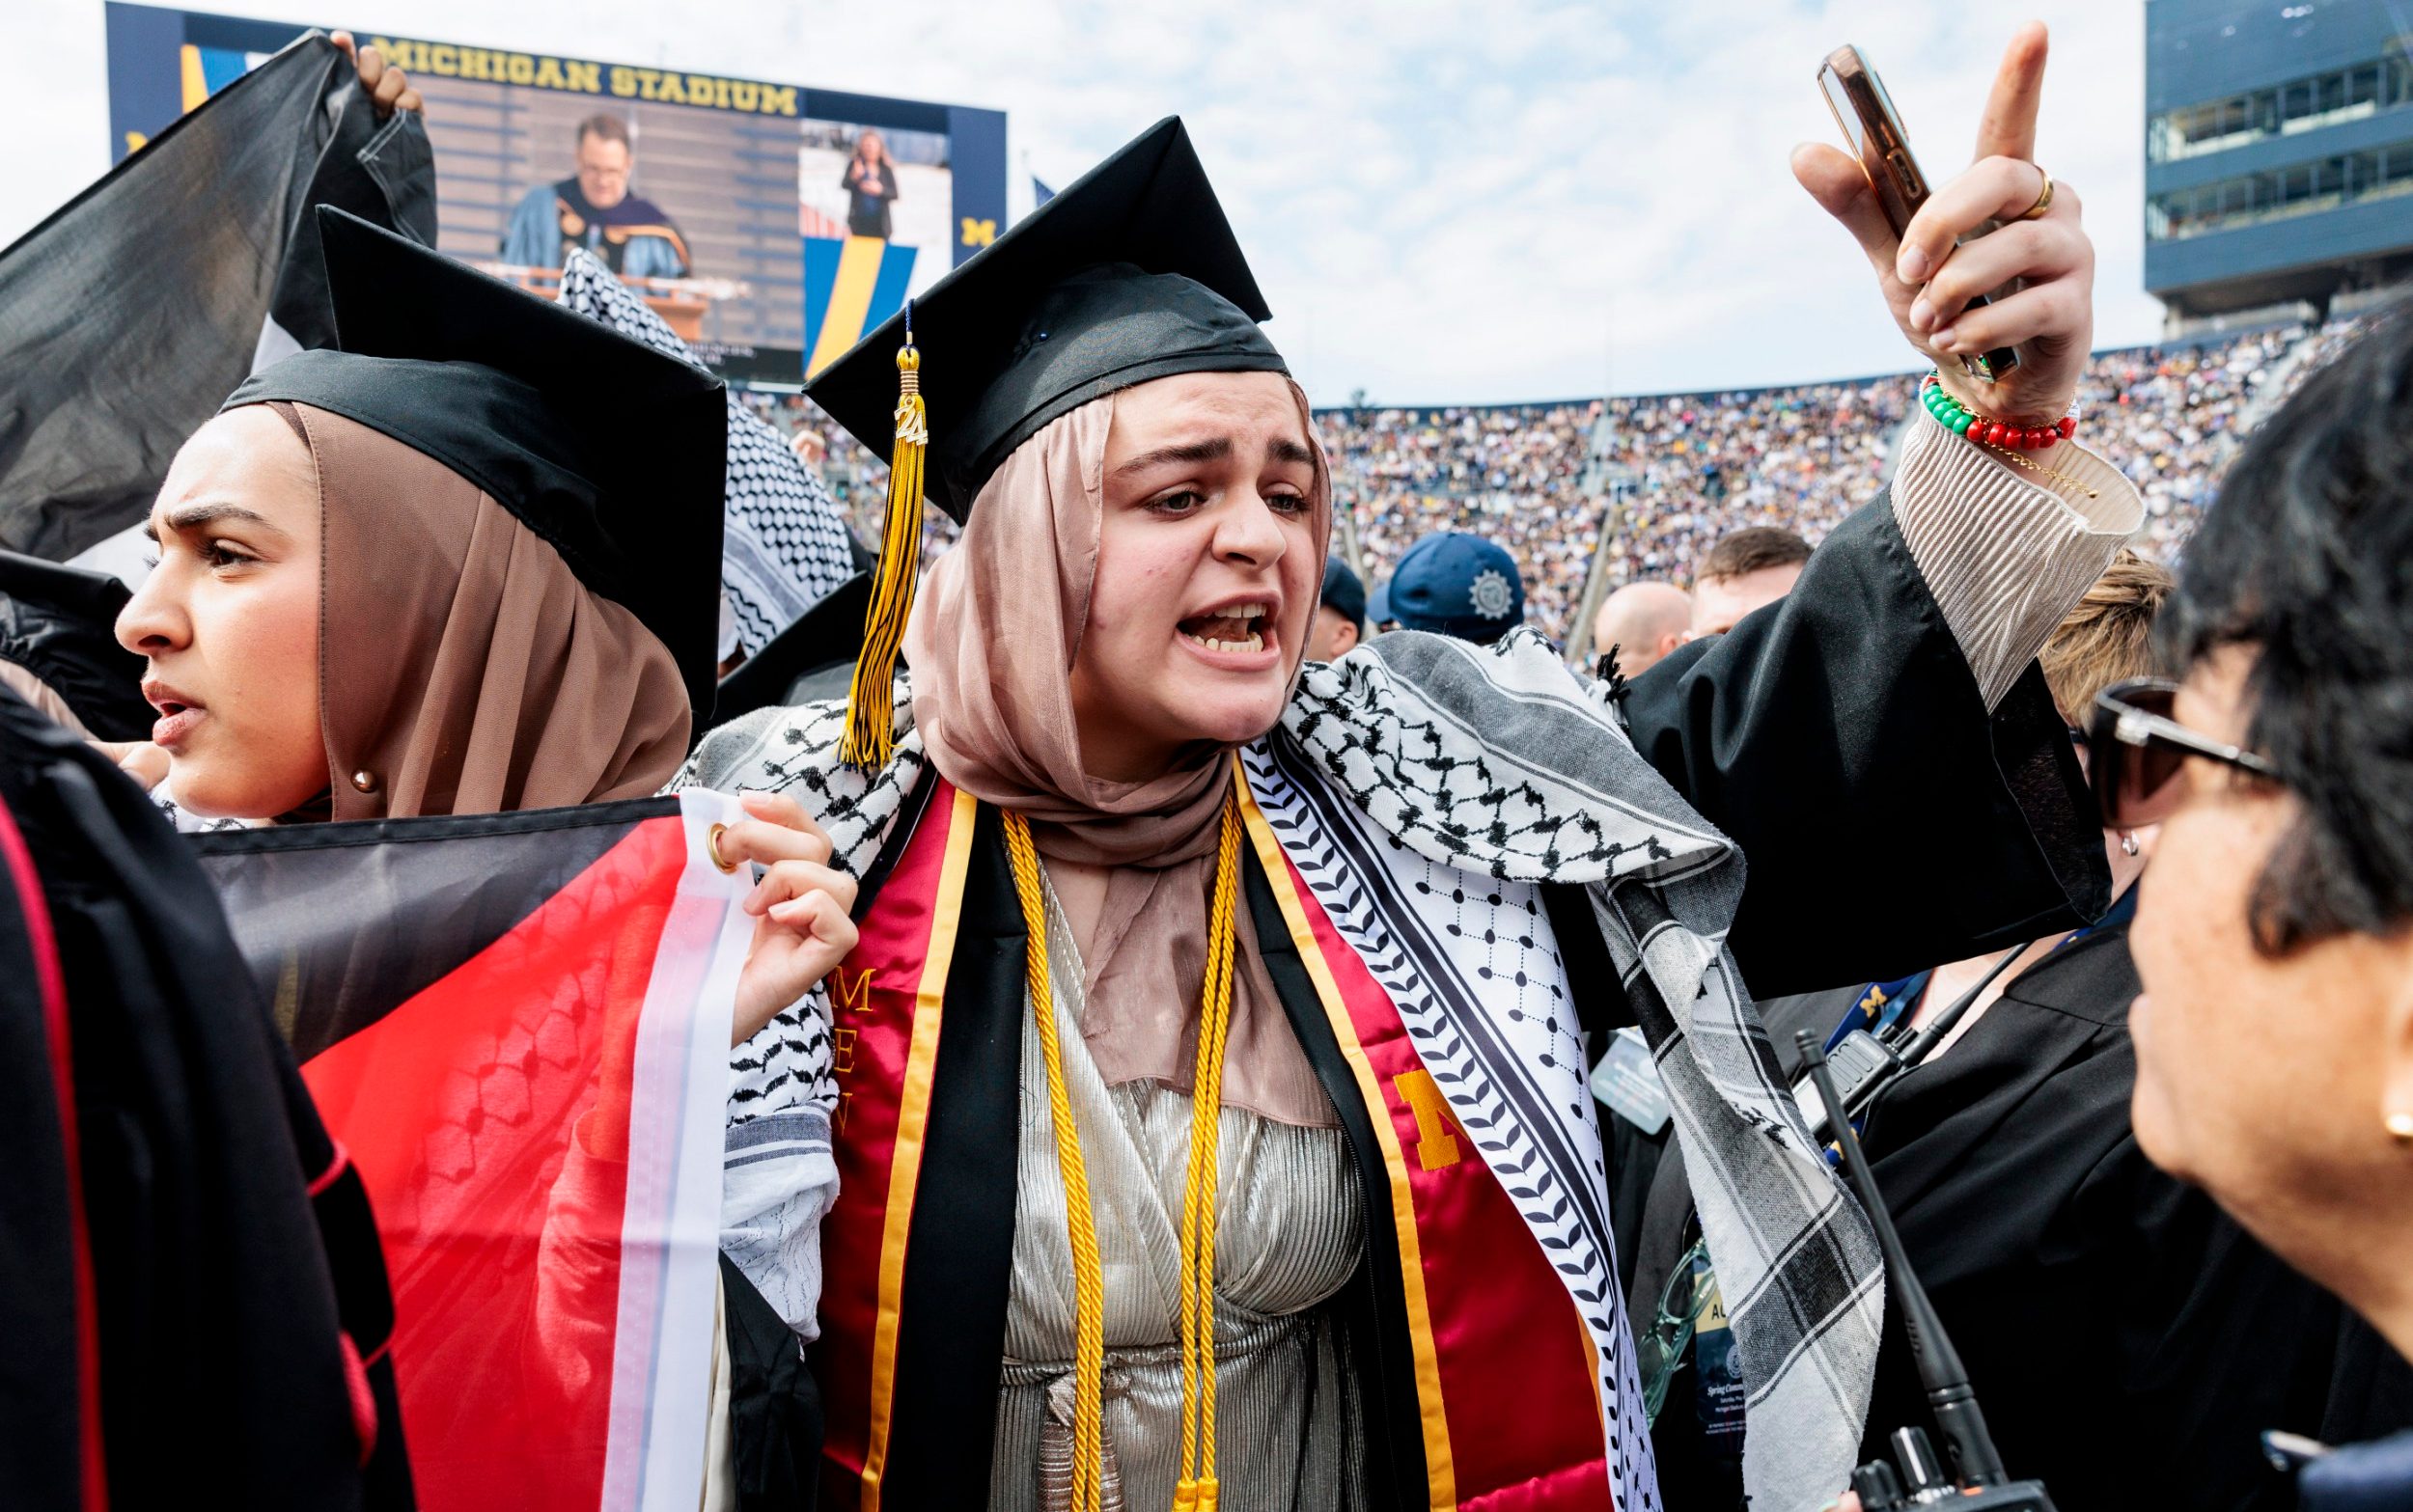 student protesters disrupt university of michigan graduation